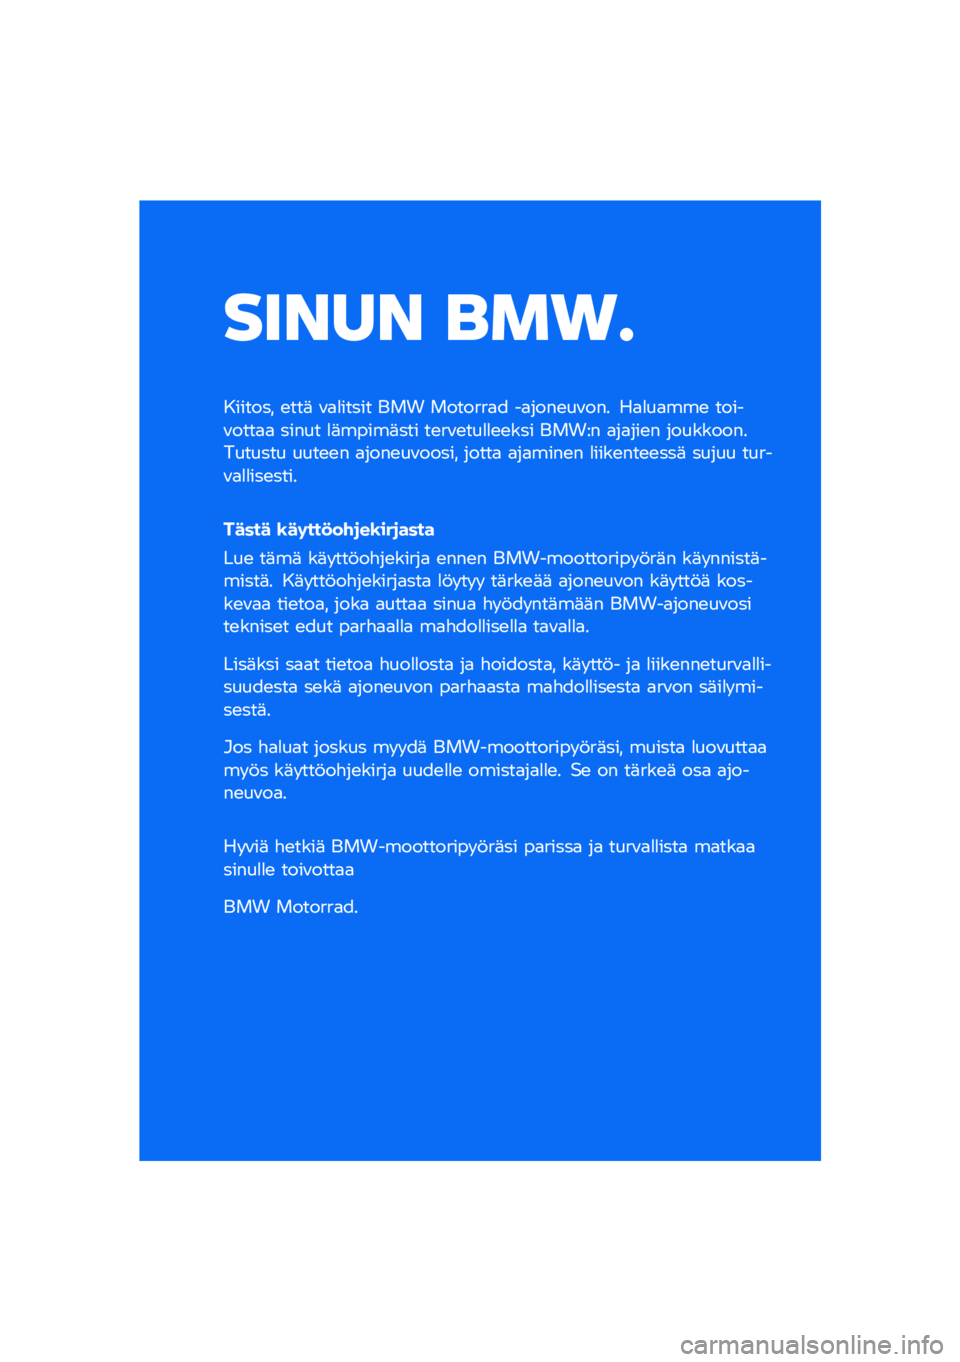 BMW MOTORRAD C 400 X 2021  Käsikirja (in Finnish) ����� ���\b�	
������� �\b���	 �\f�
�
����� ��� �������
� ��
����\b��\f��� ��
�
��
���\b �����\f����
�
 ����� �
�	�����	��� ��\b��\f�\b�